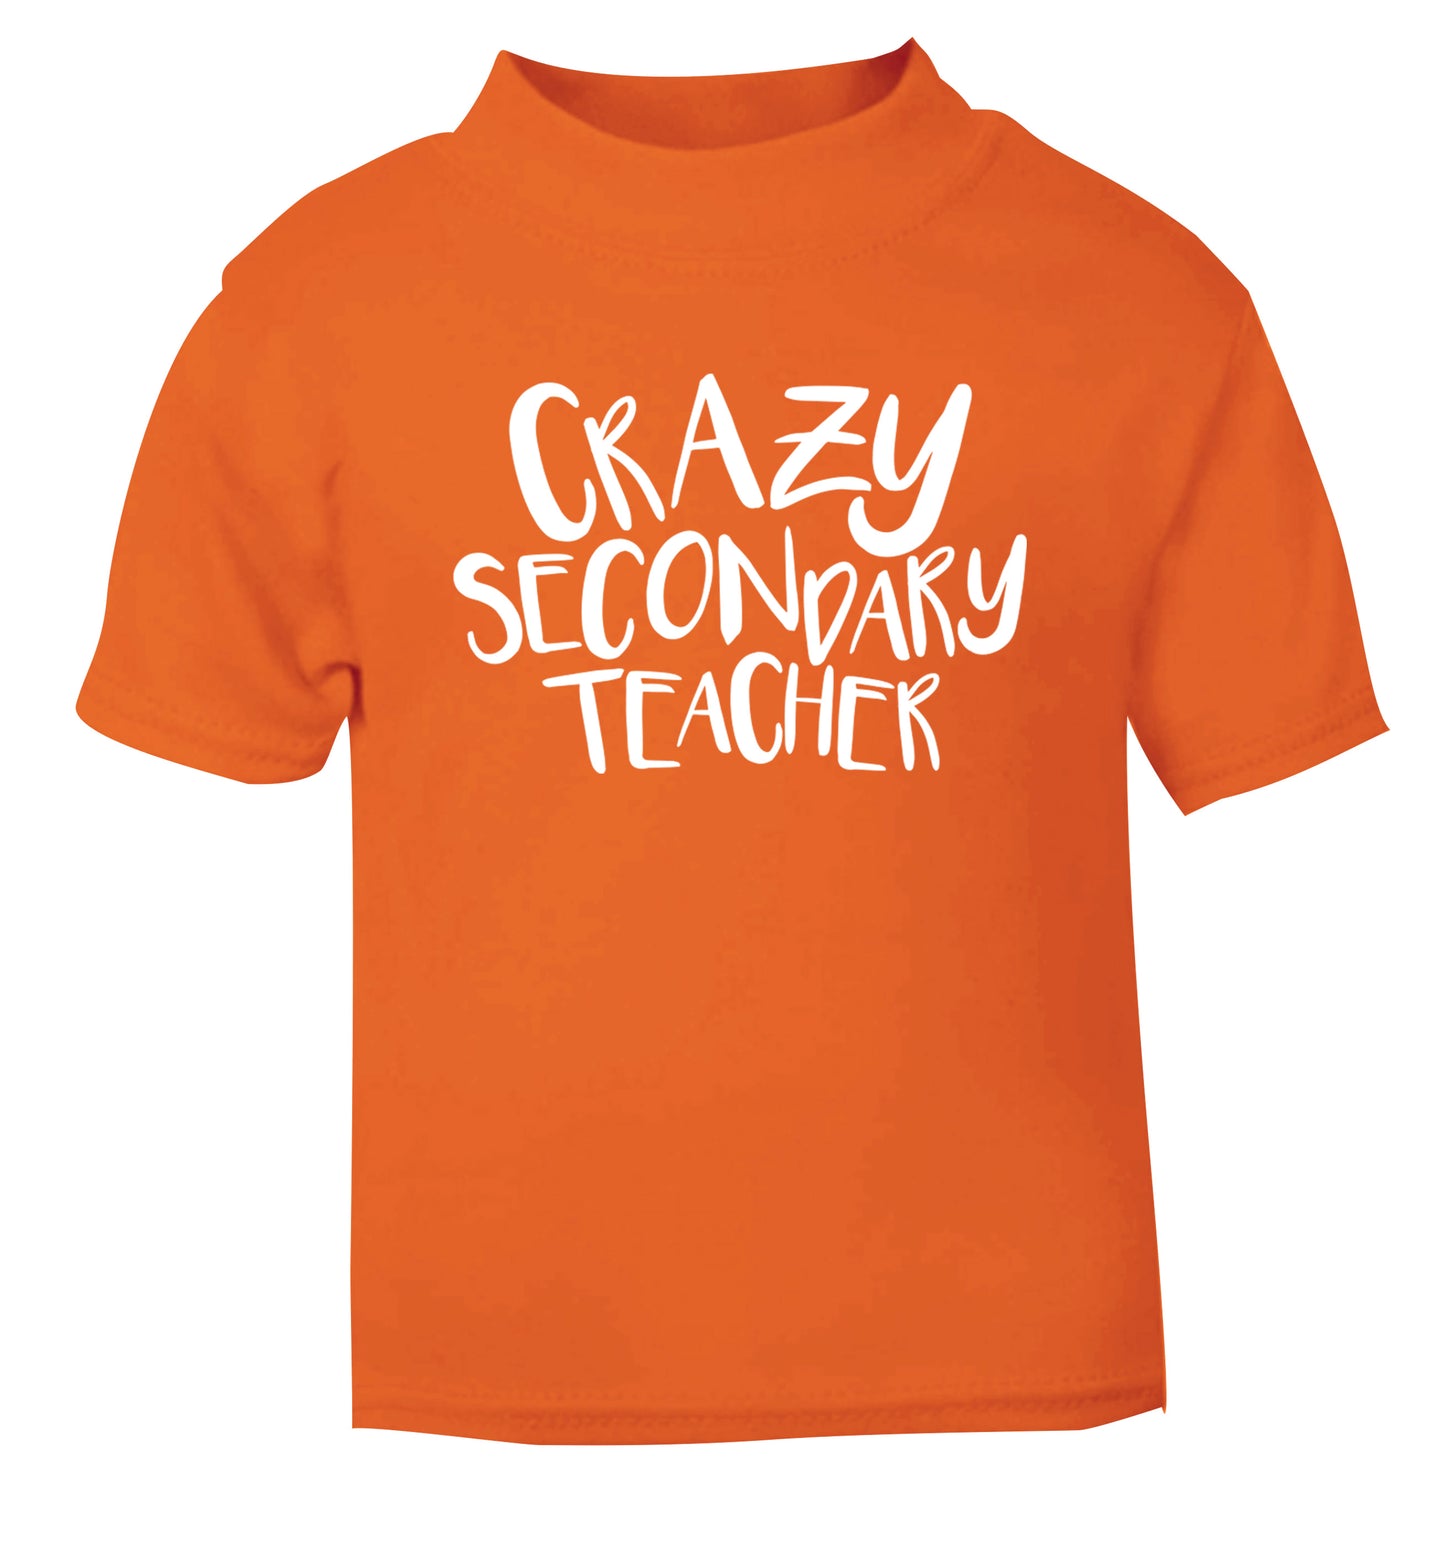 Crazy secondary teacher orange Baby Toddler Tshirt 2 Years